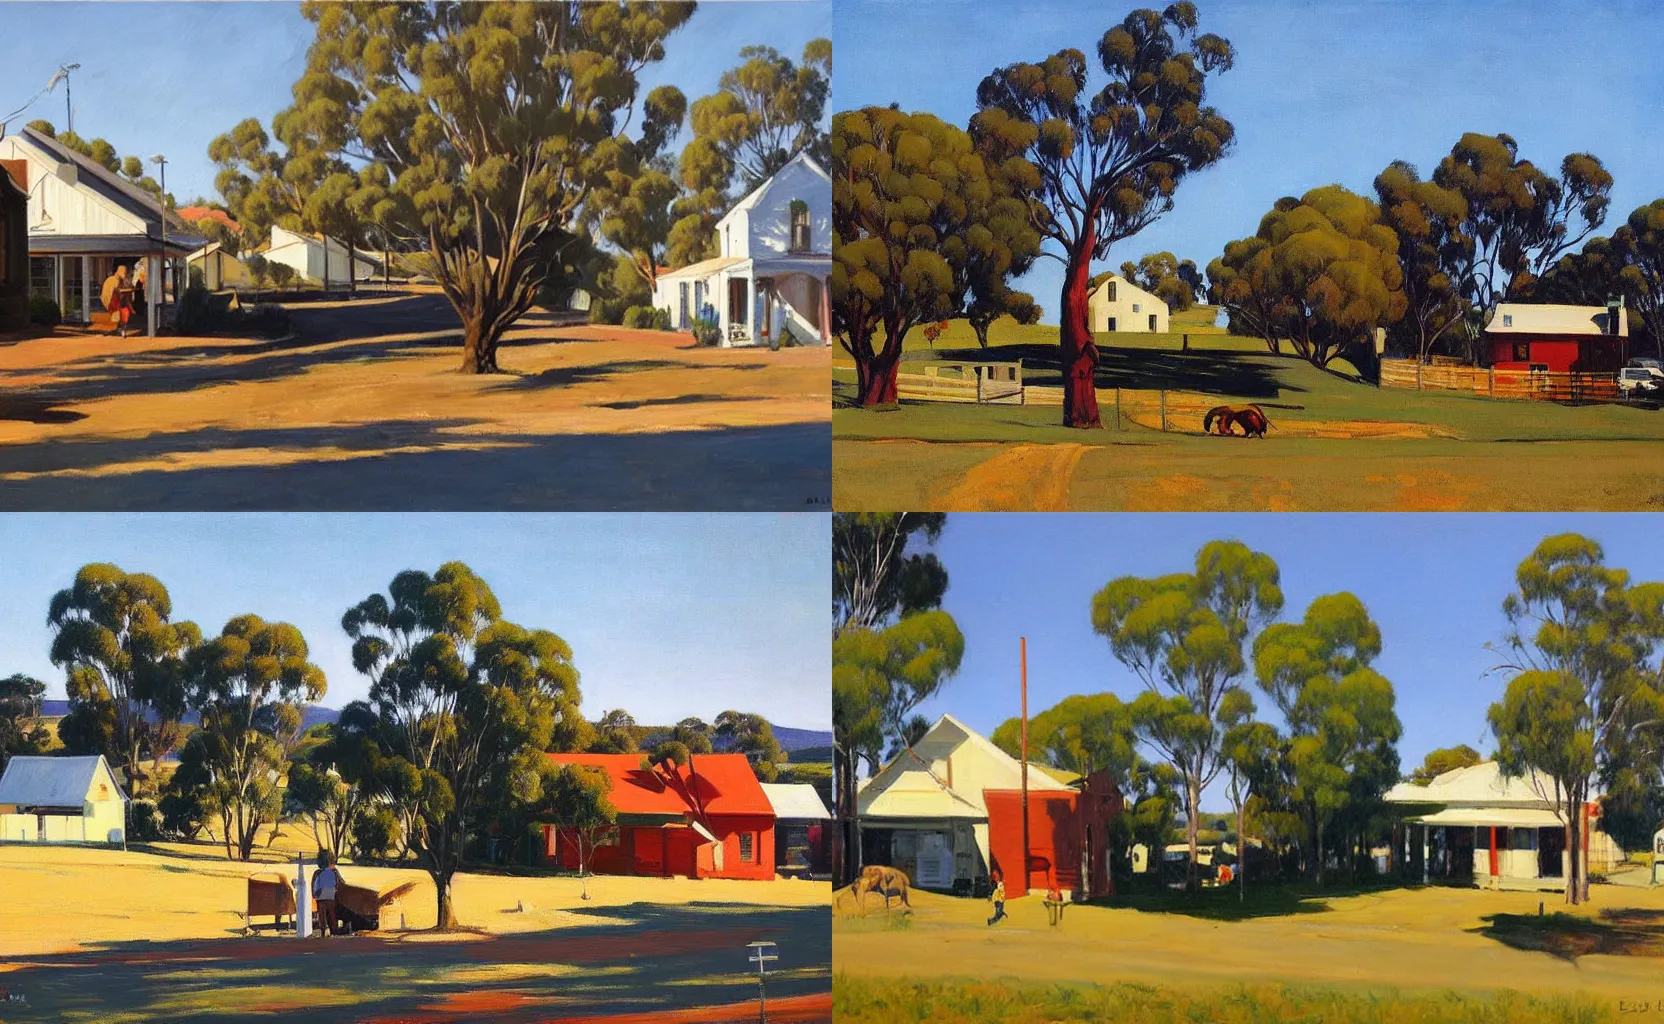 Prompt: a quaint rural Australian town, painting by Ben Aronson and Edward Hopper